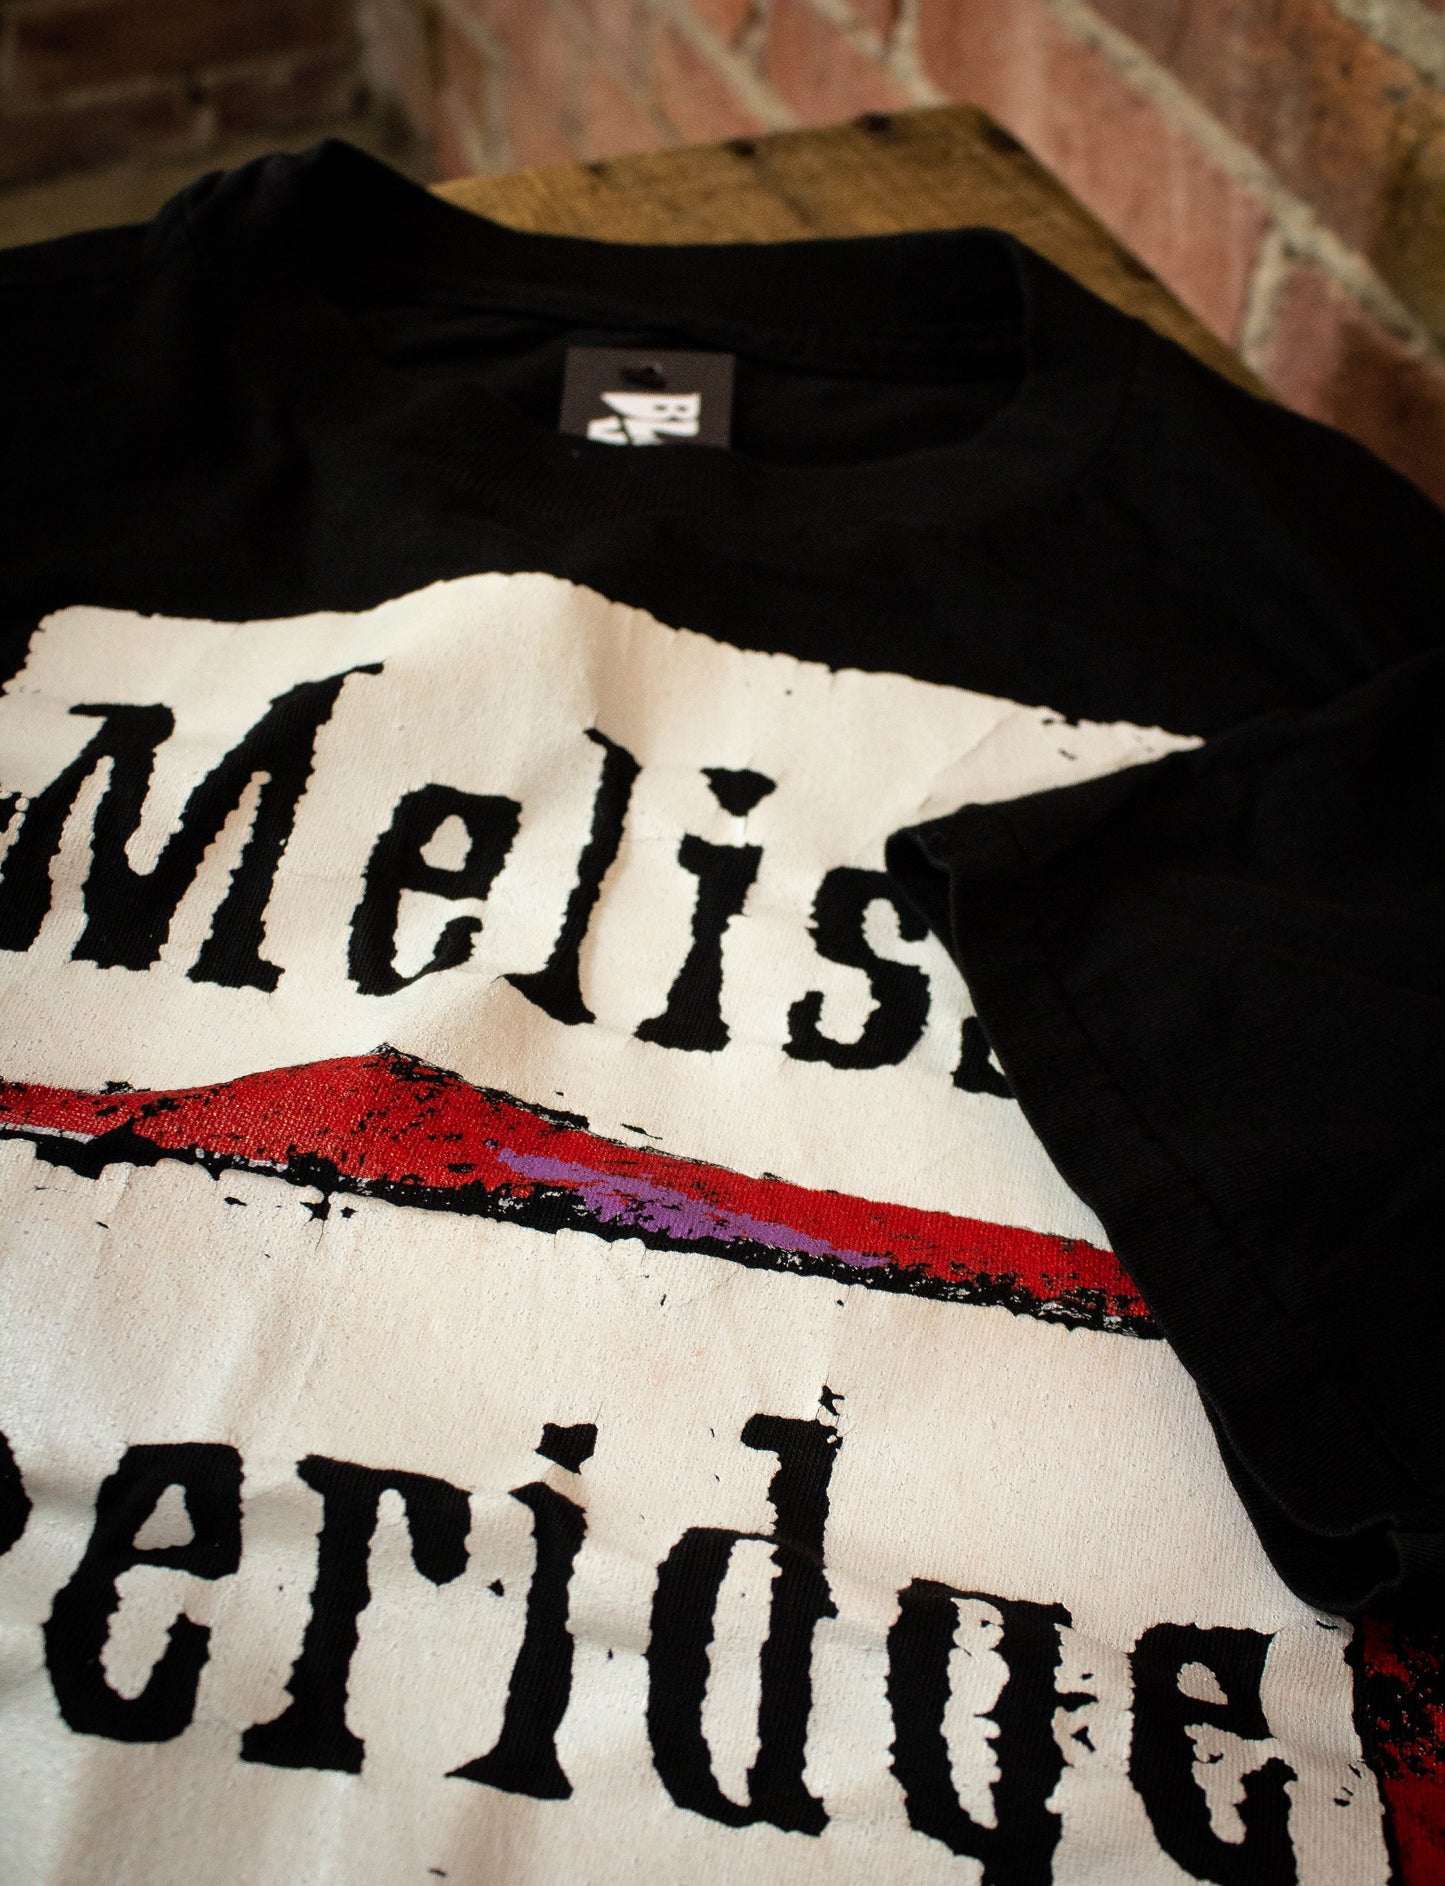 Vintage 1993 Melissa Etheridge Yes I Am Concert T Shirt Unisex XL